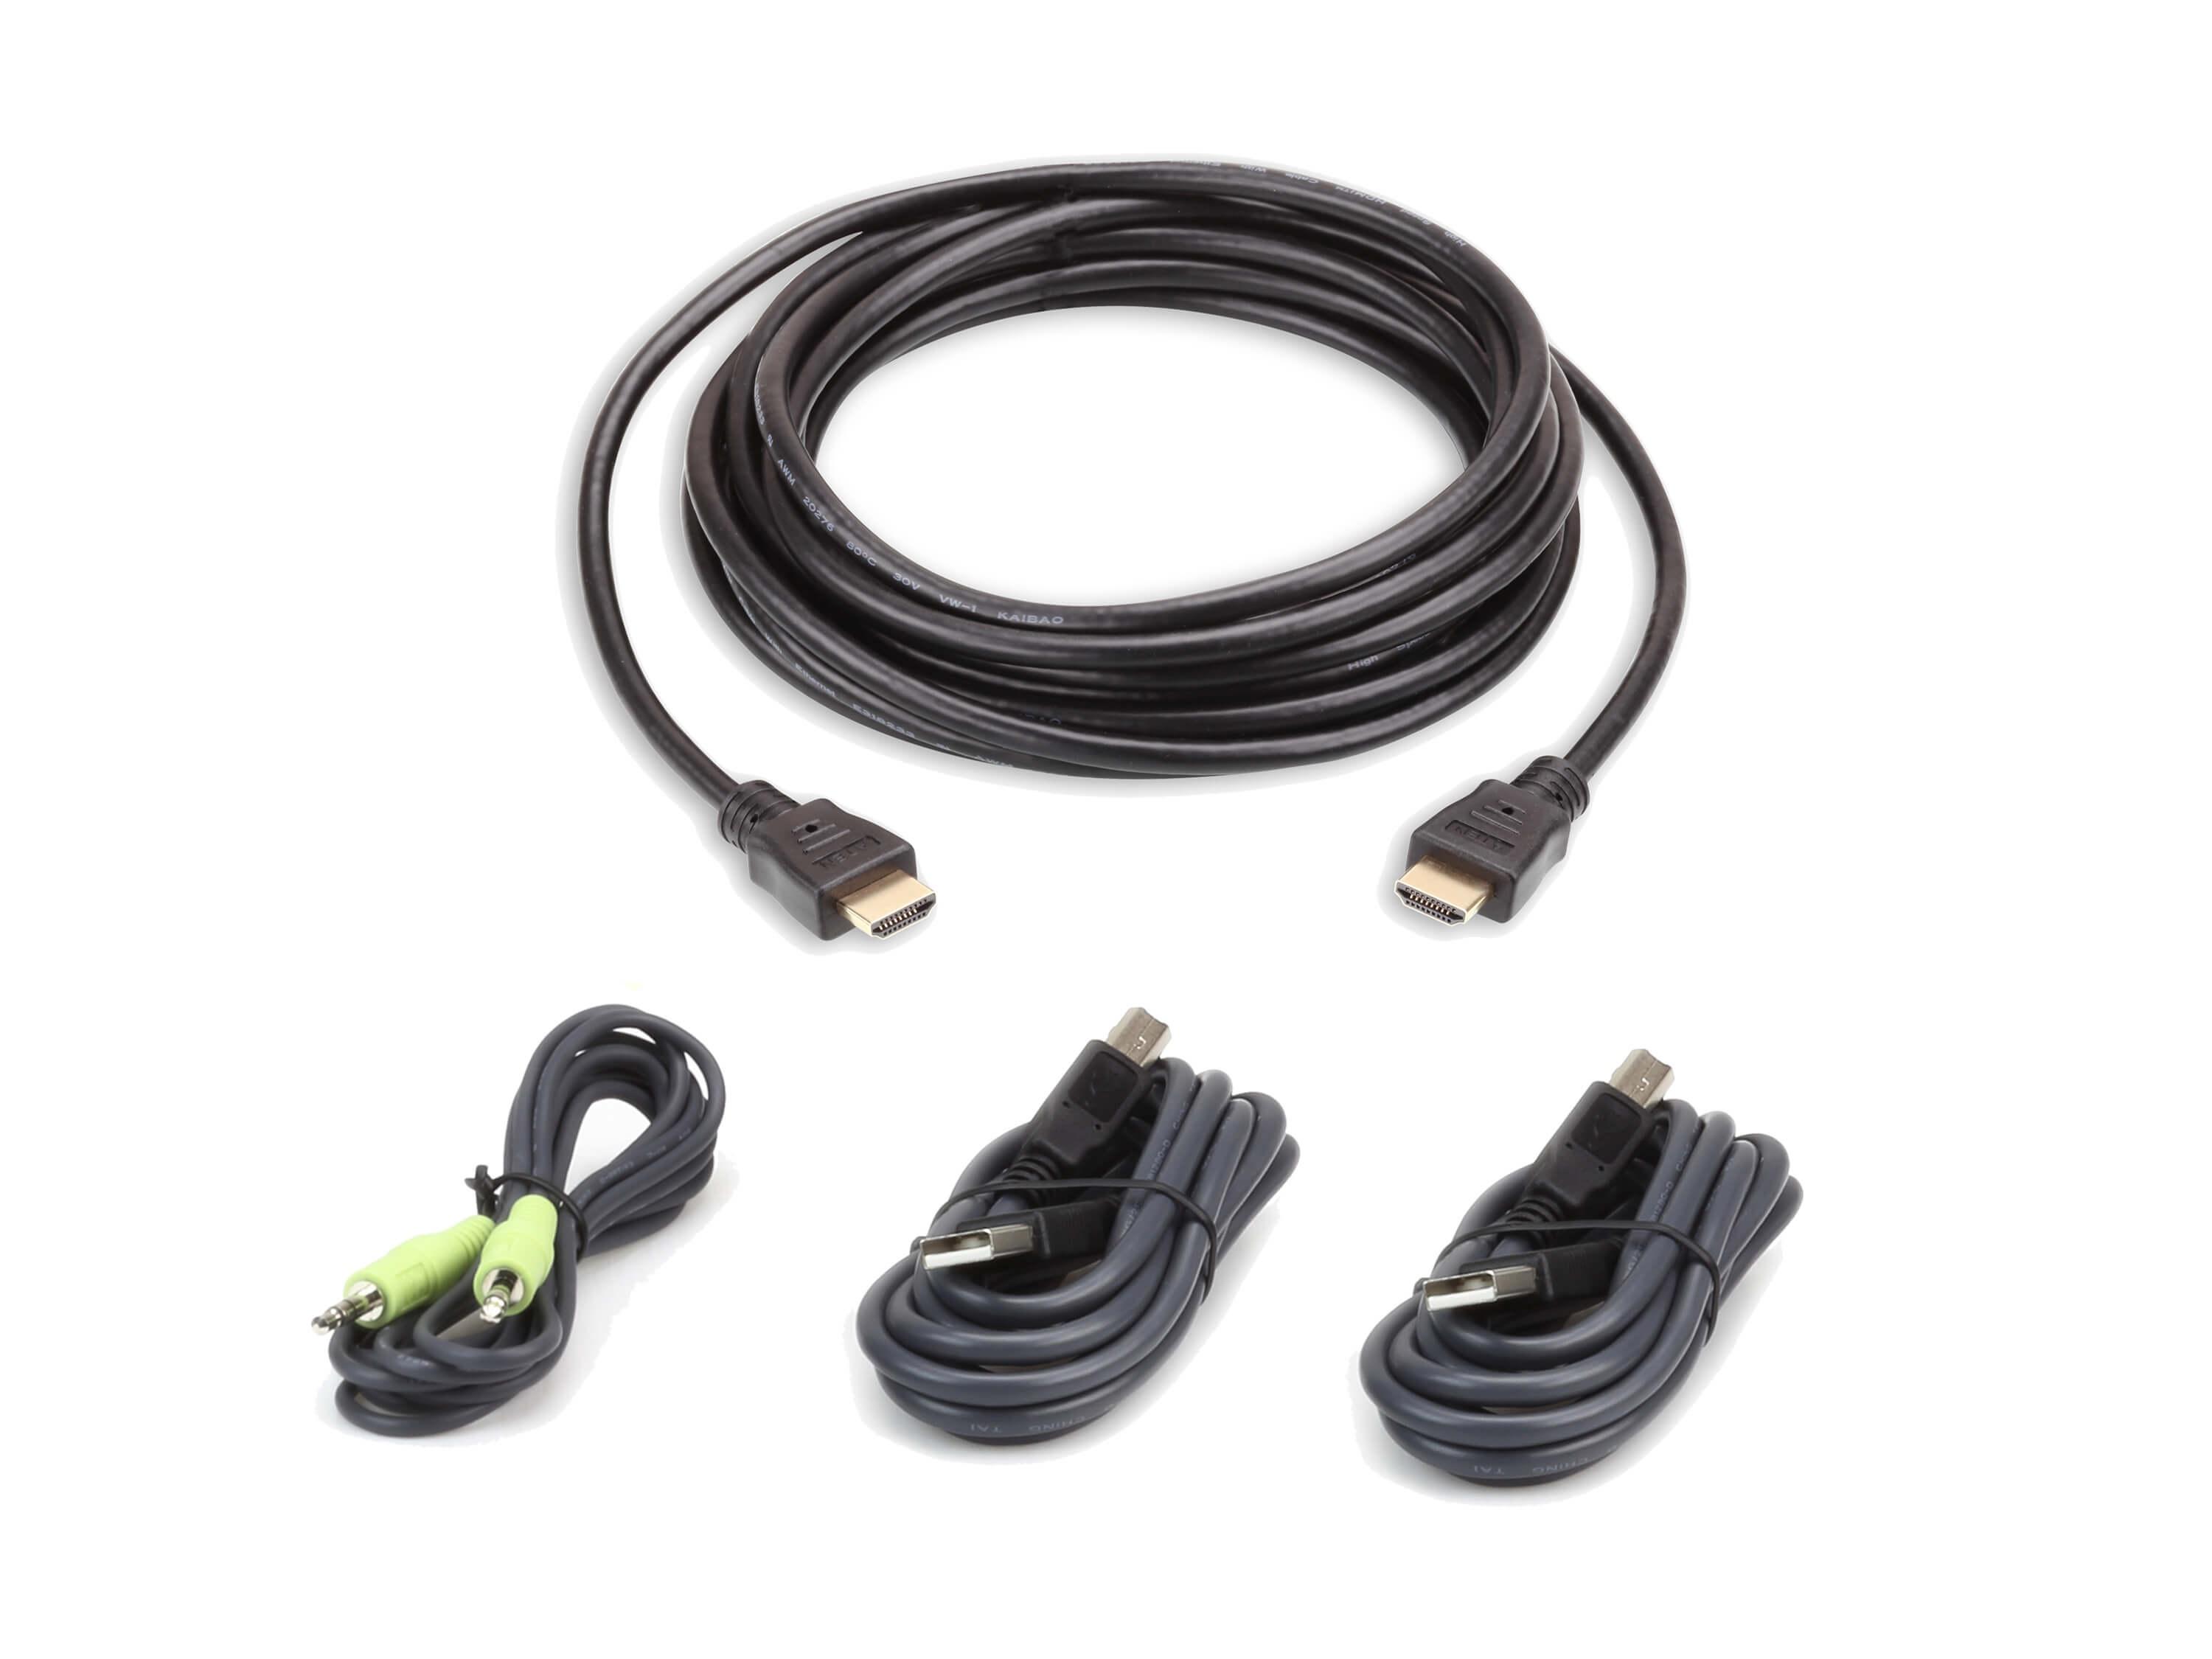 2L-7D03UHX4 3m USB HDMI Secure KVM Cable Kit by Aten